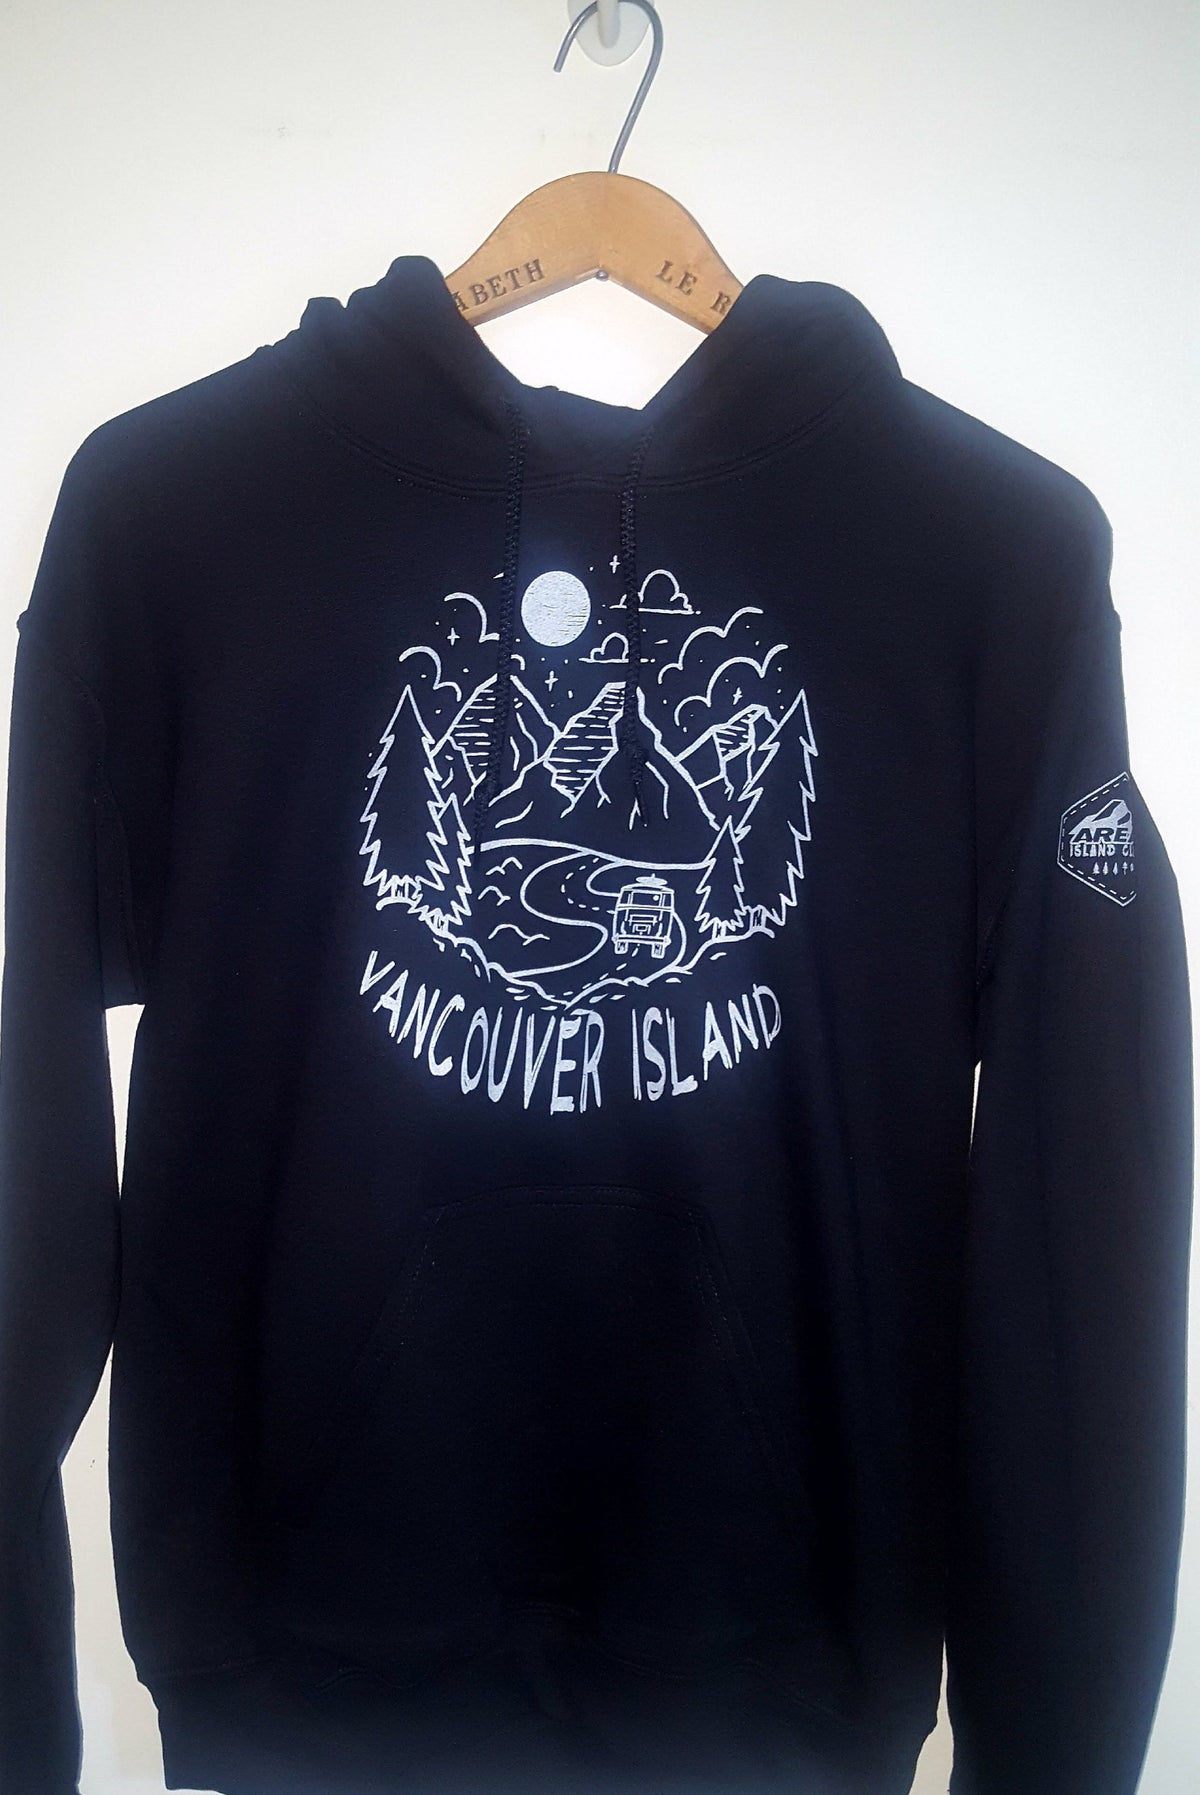 Vancouver Island Hoodie Unisex Hoodie - Area F Island Clothing